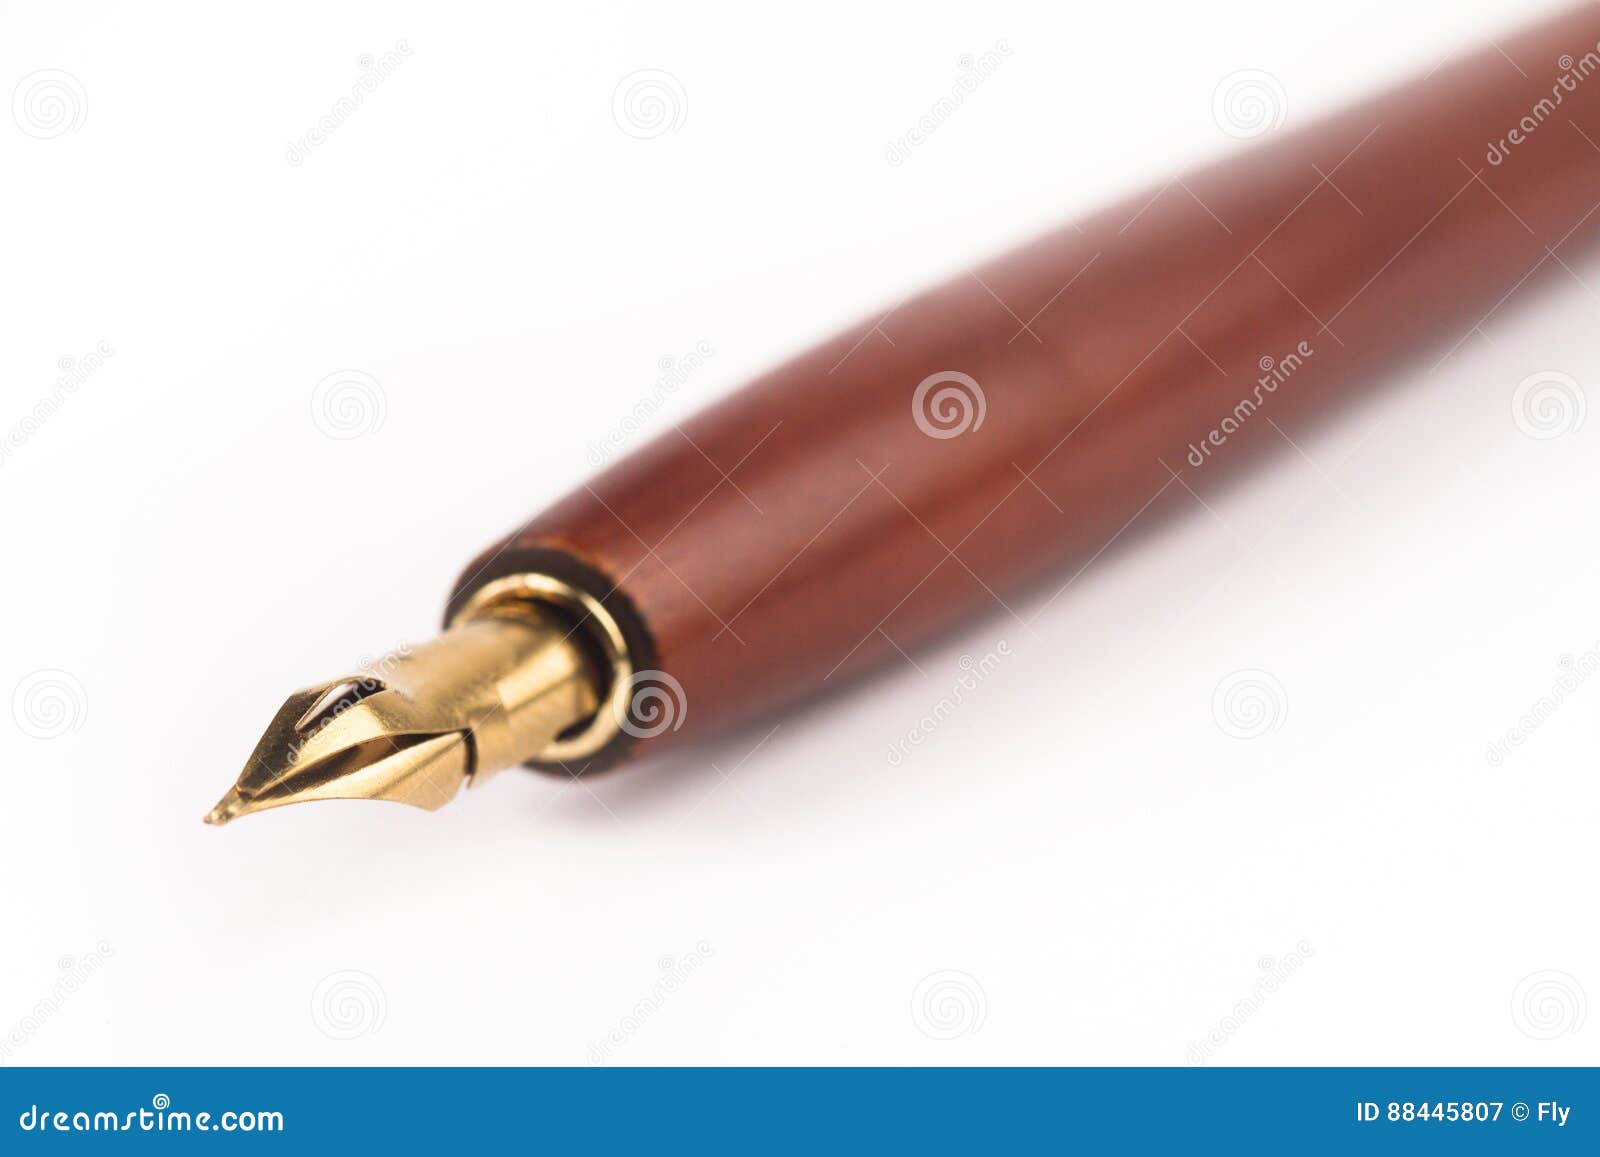 Brown ink dip pen stock image. Image of school, classic - 88445807